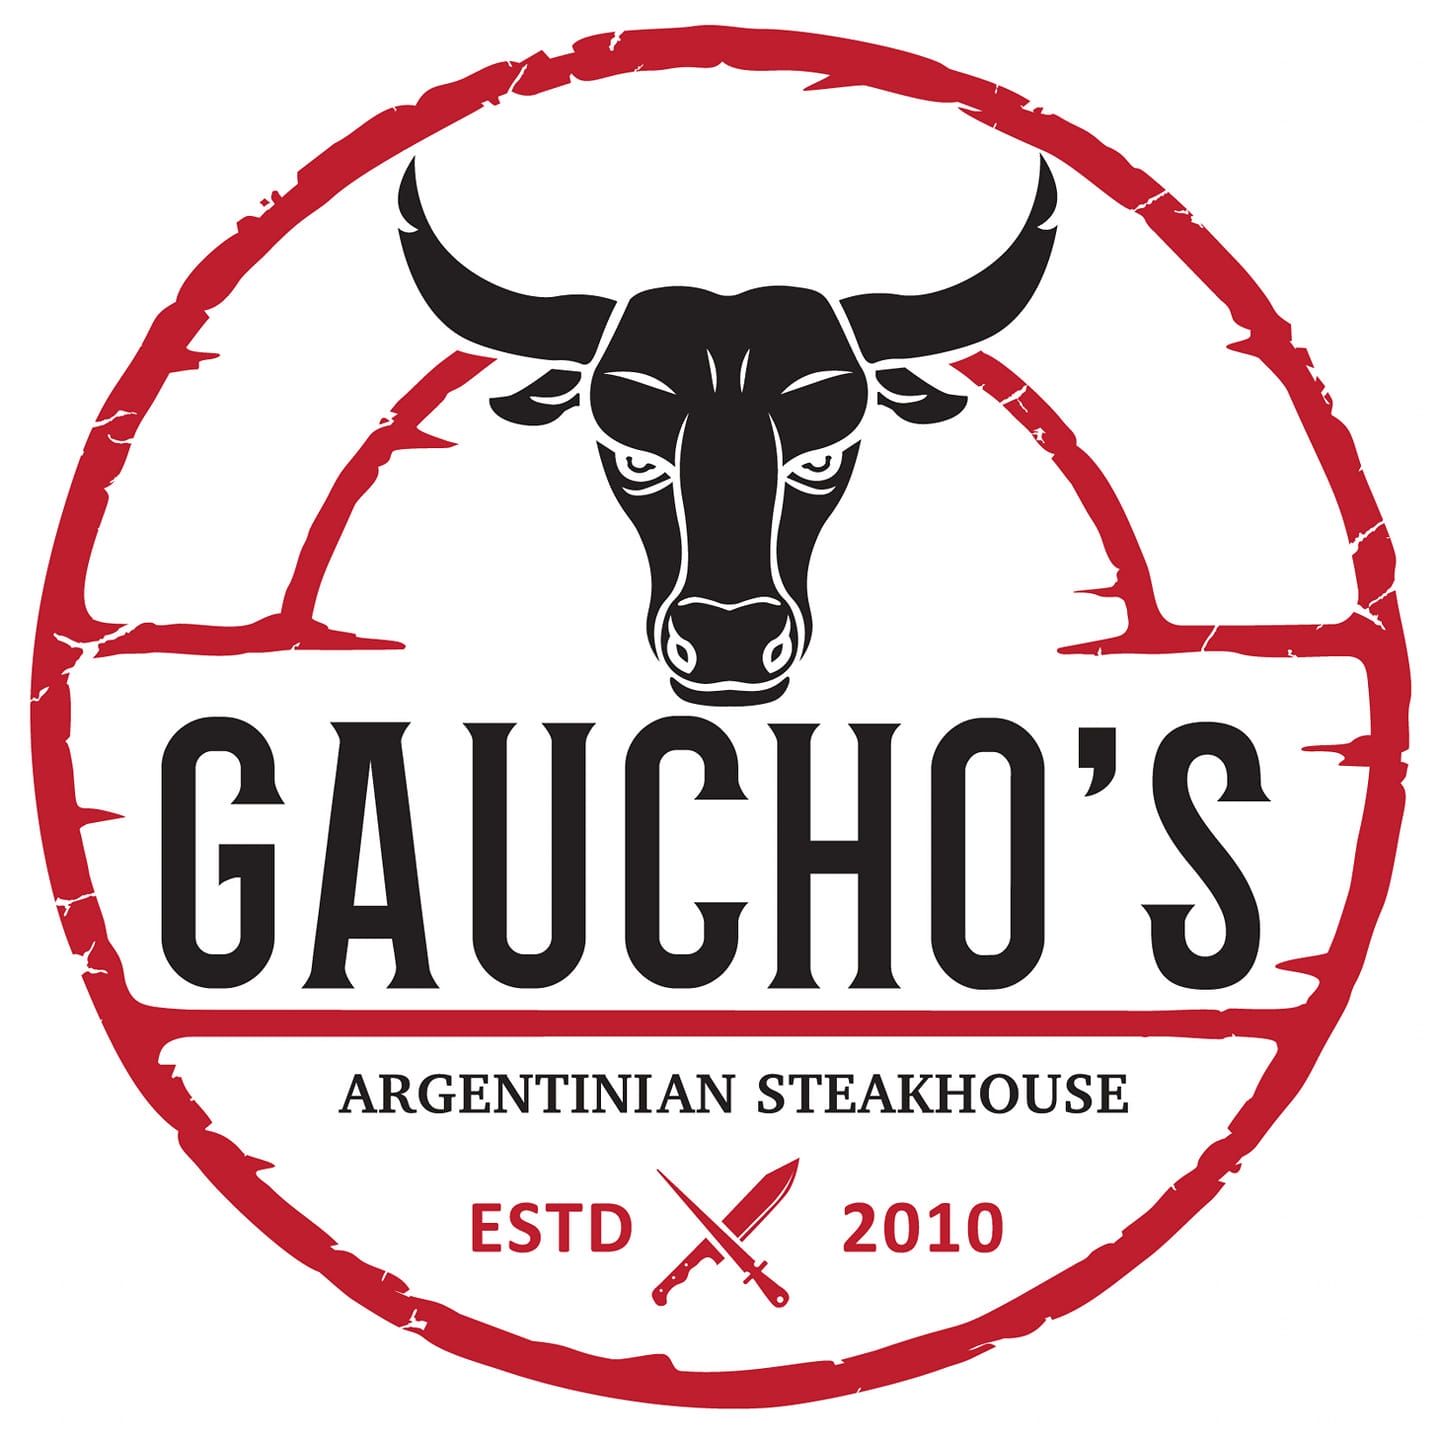 Gaucho's Argentinian Steakhouse